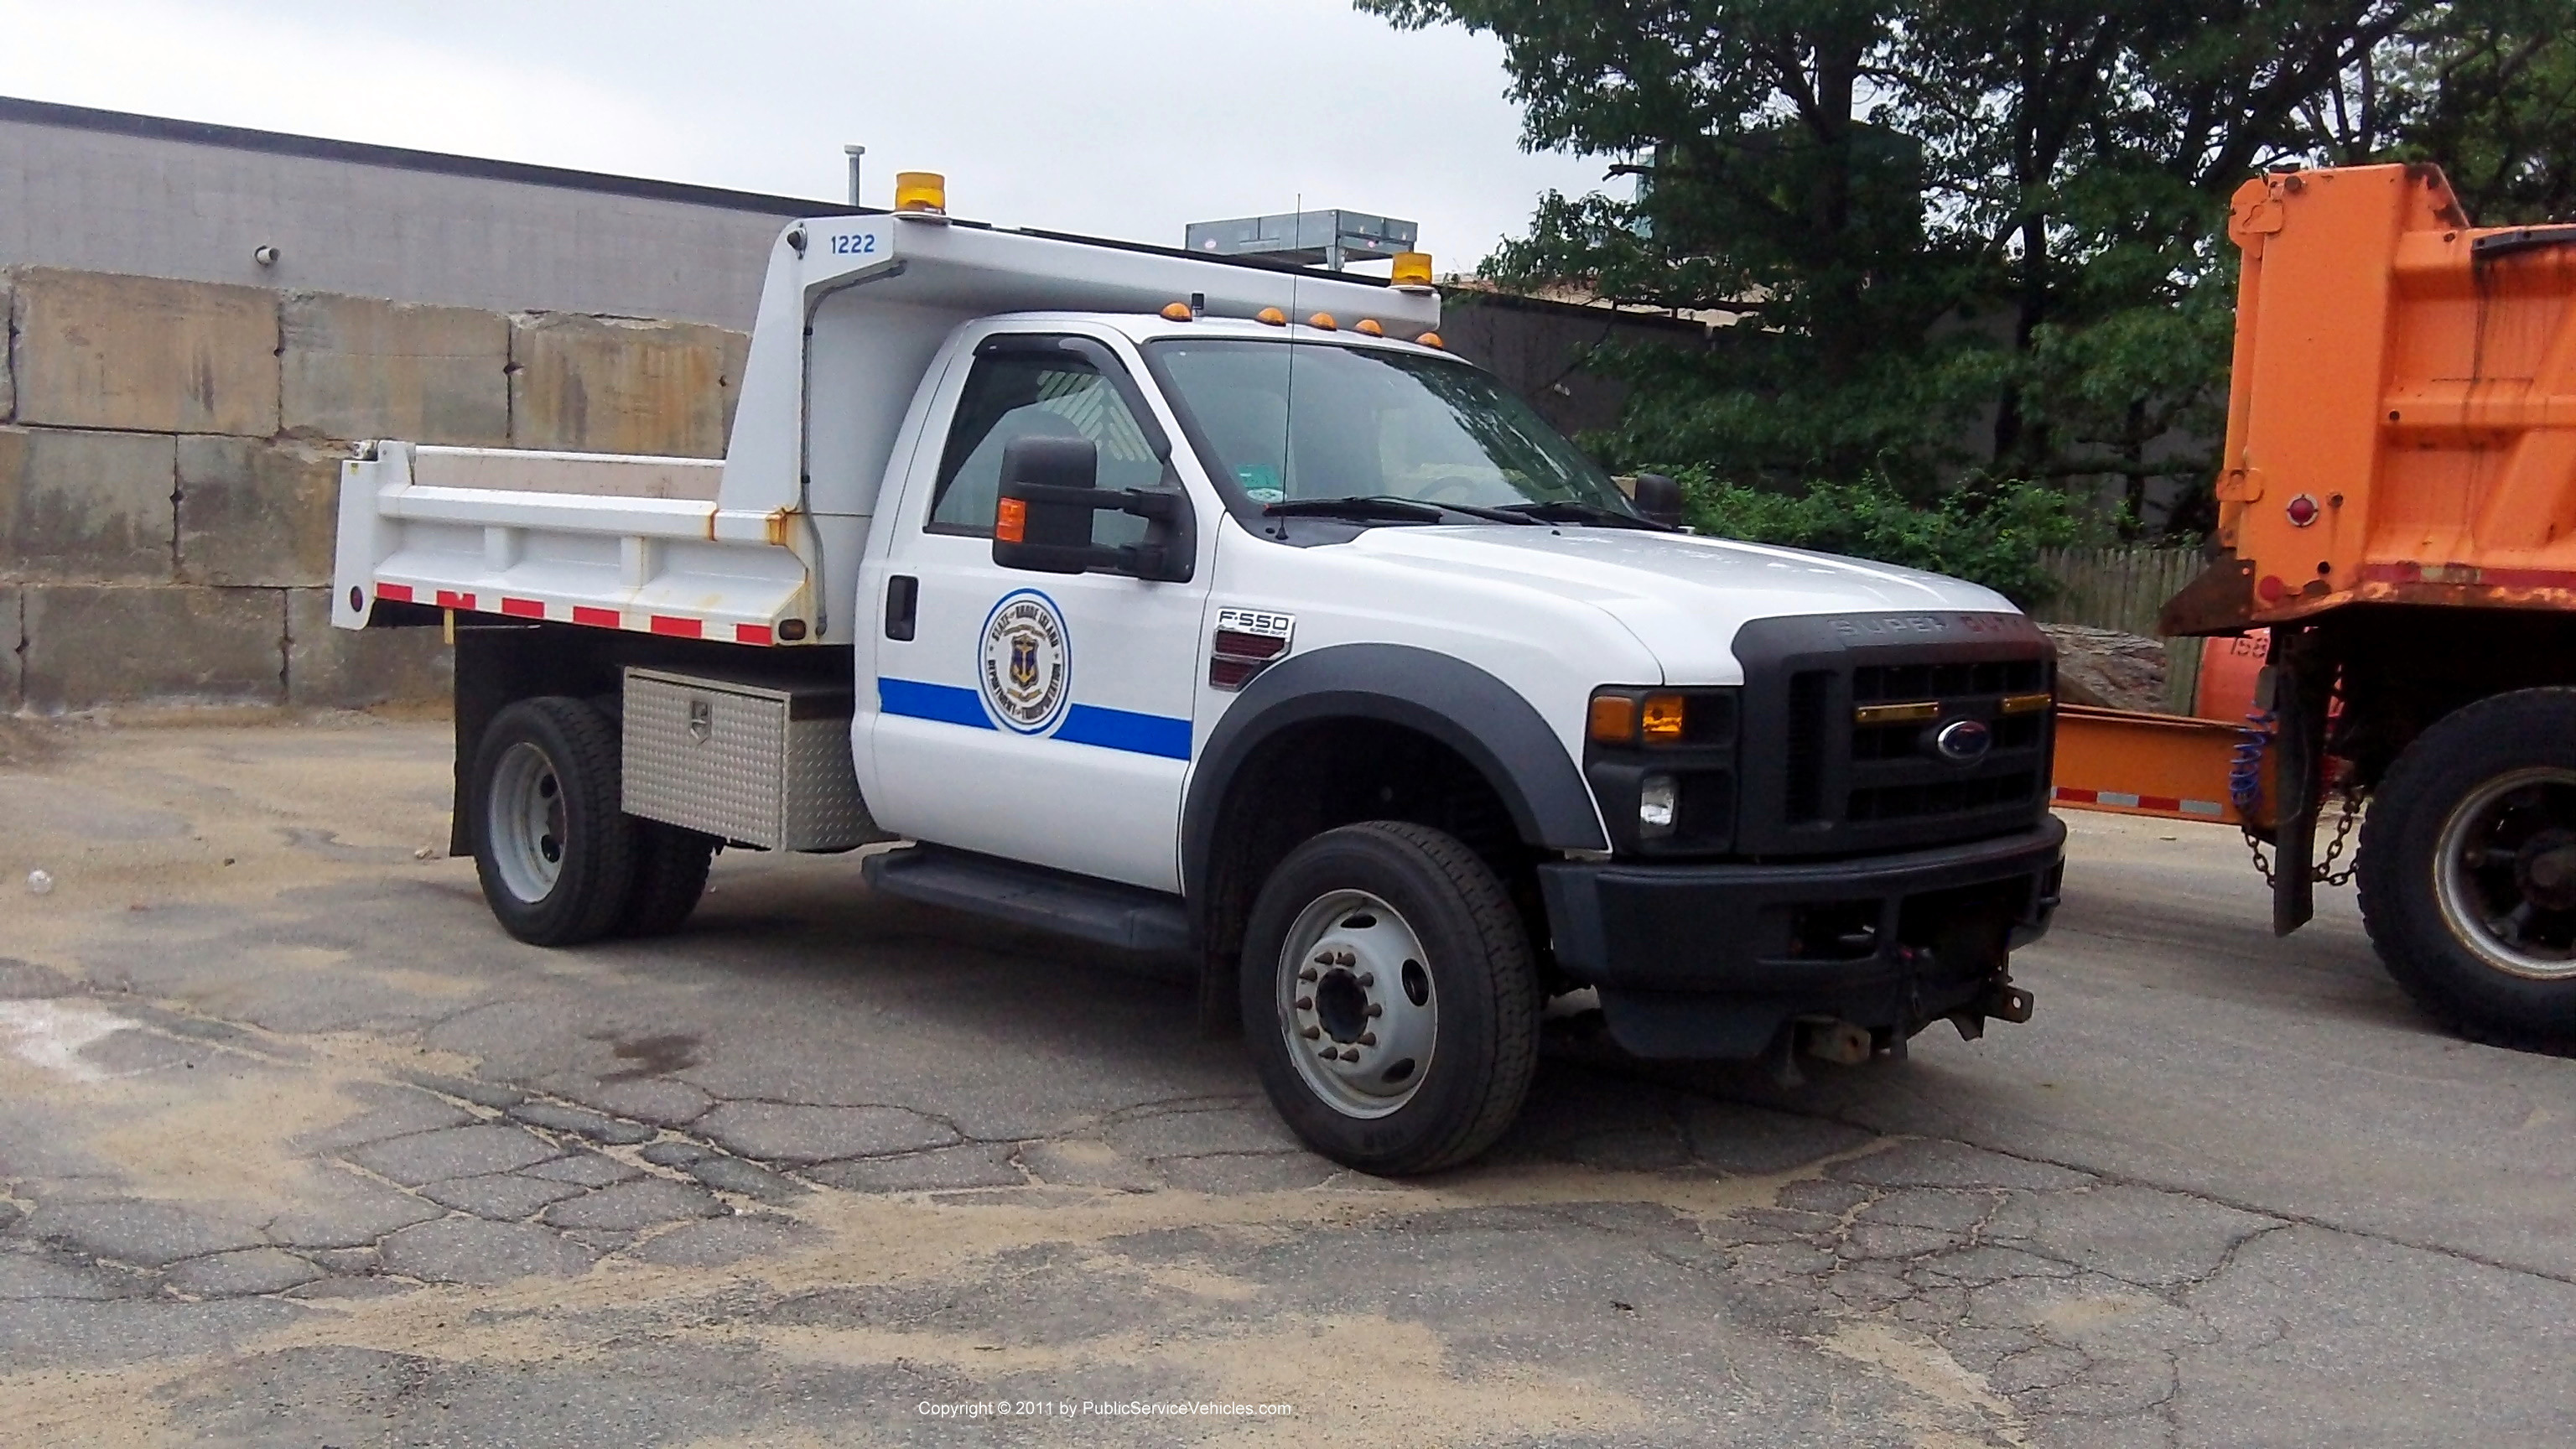 A photo  of Rhode Island Department of Transportation
            Truck 1222, a 2008-2010 Ford F-550             taken by Kieran Egan